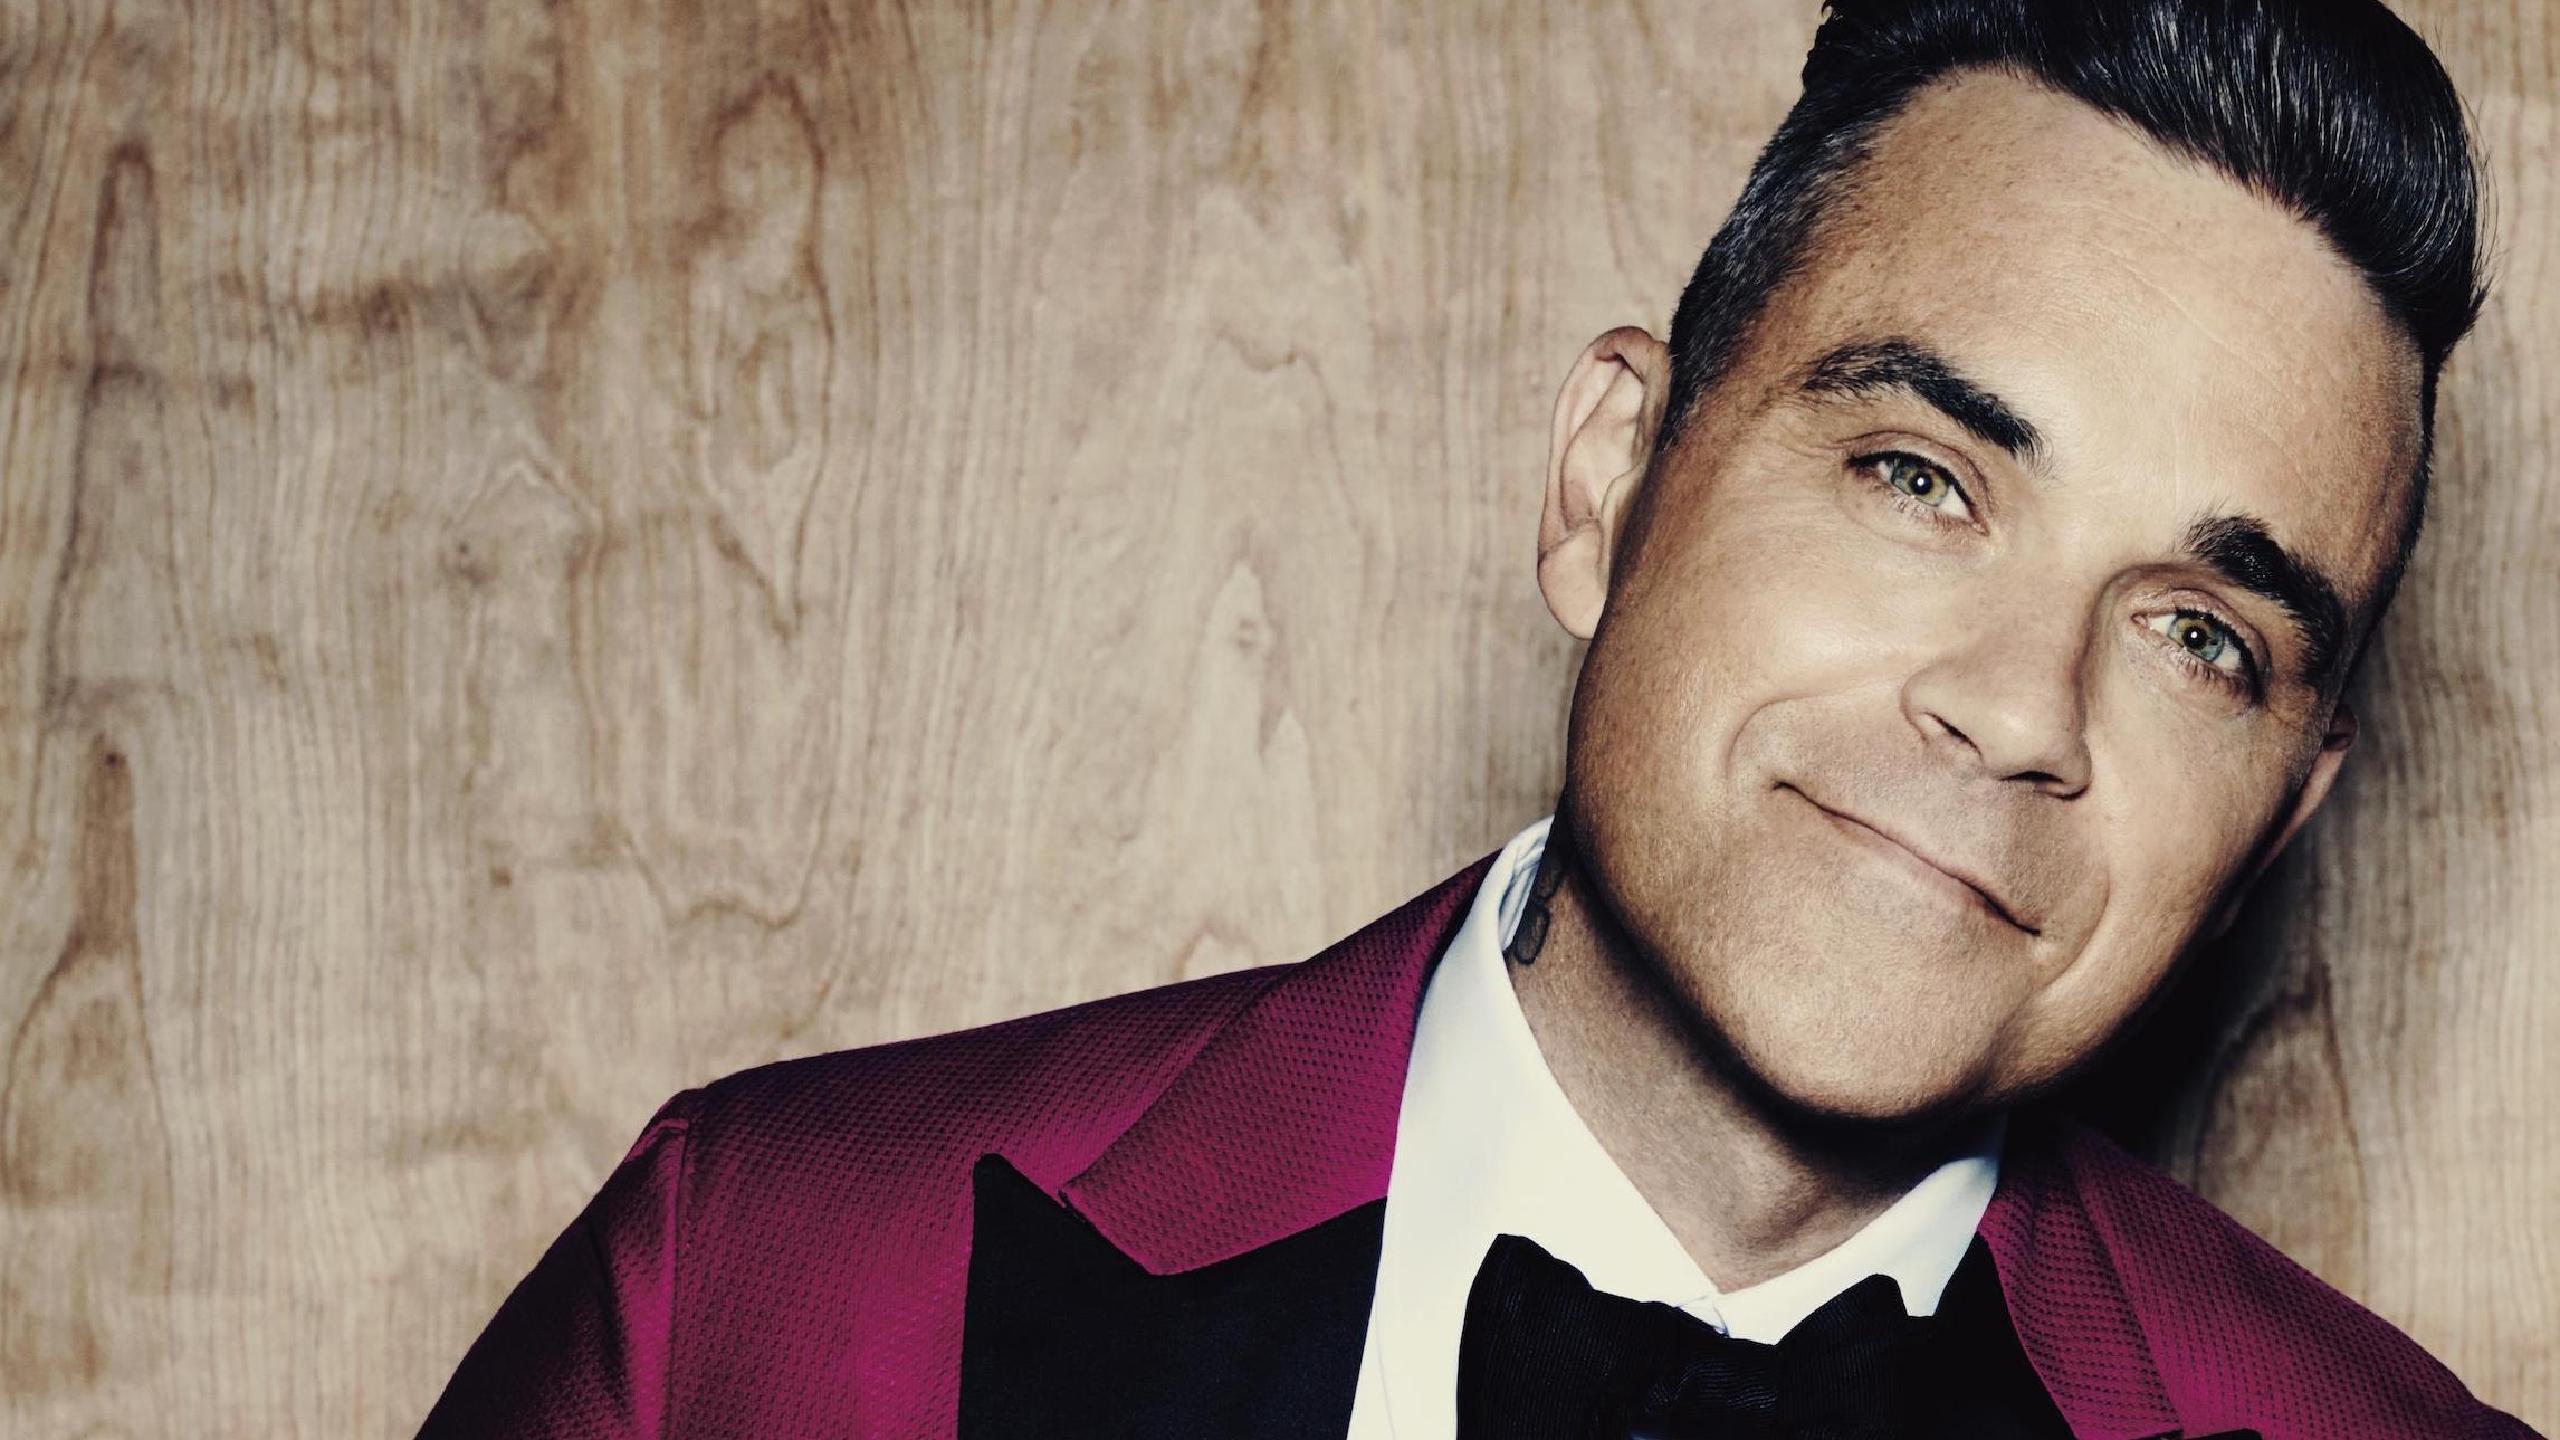 Robbie Williams tour dates 2017 2018. Robbie Williams tickets